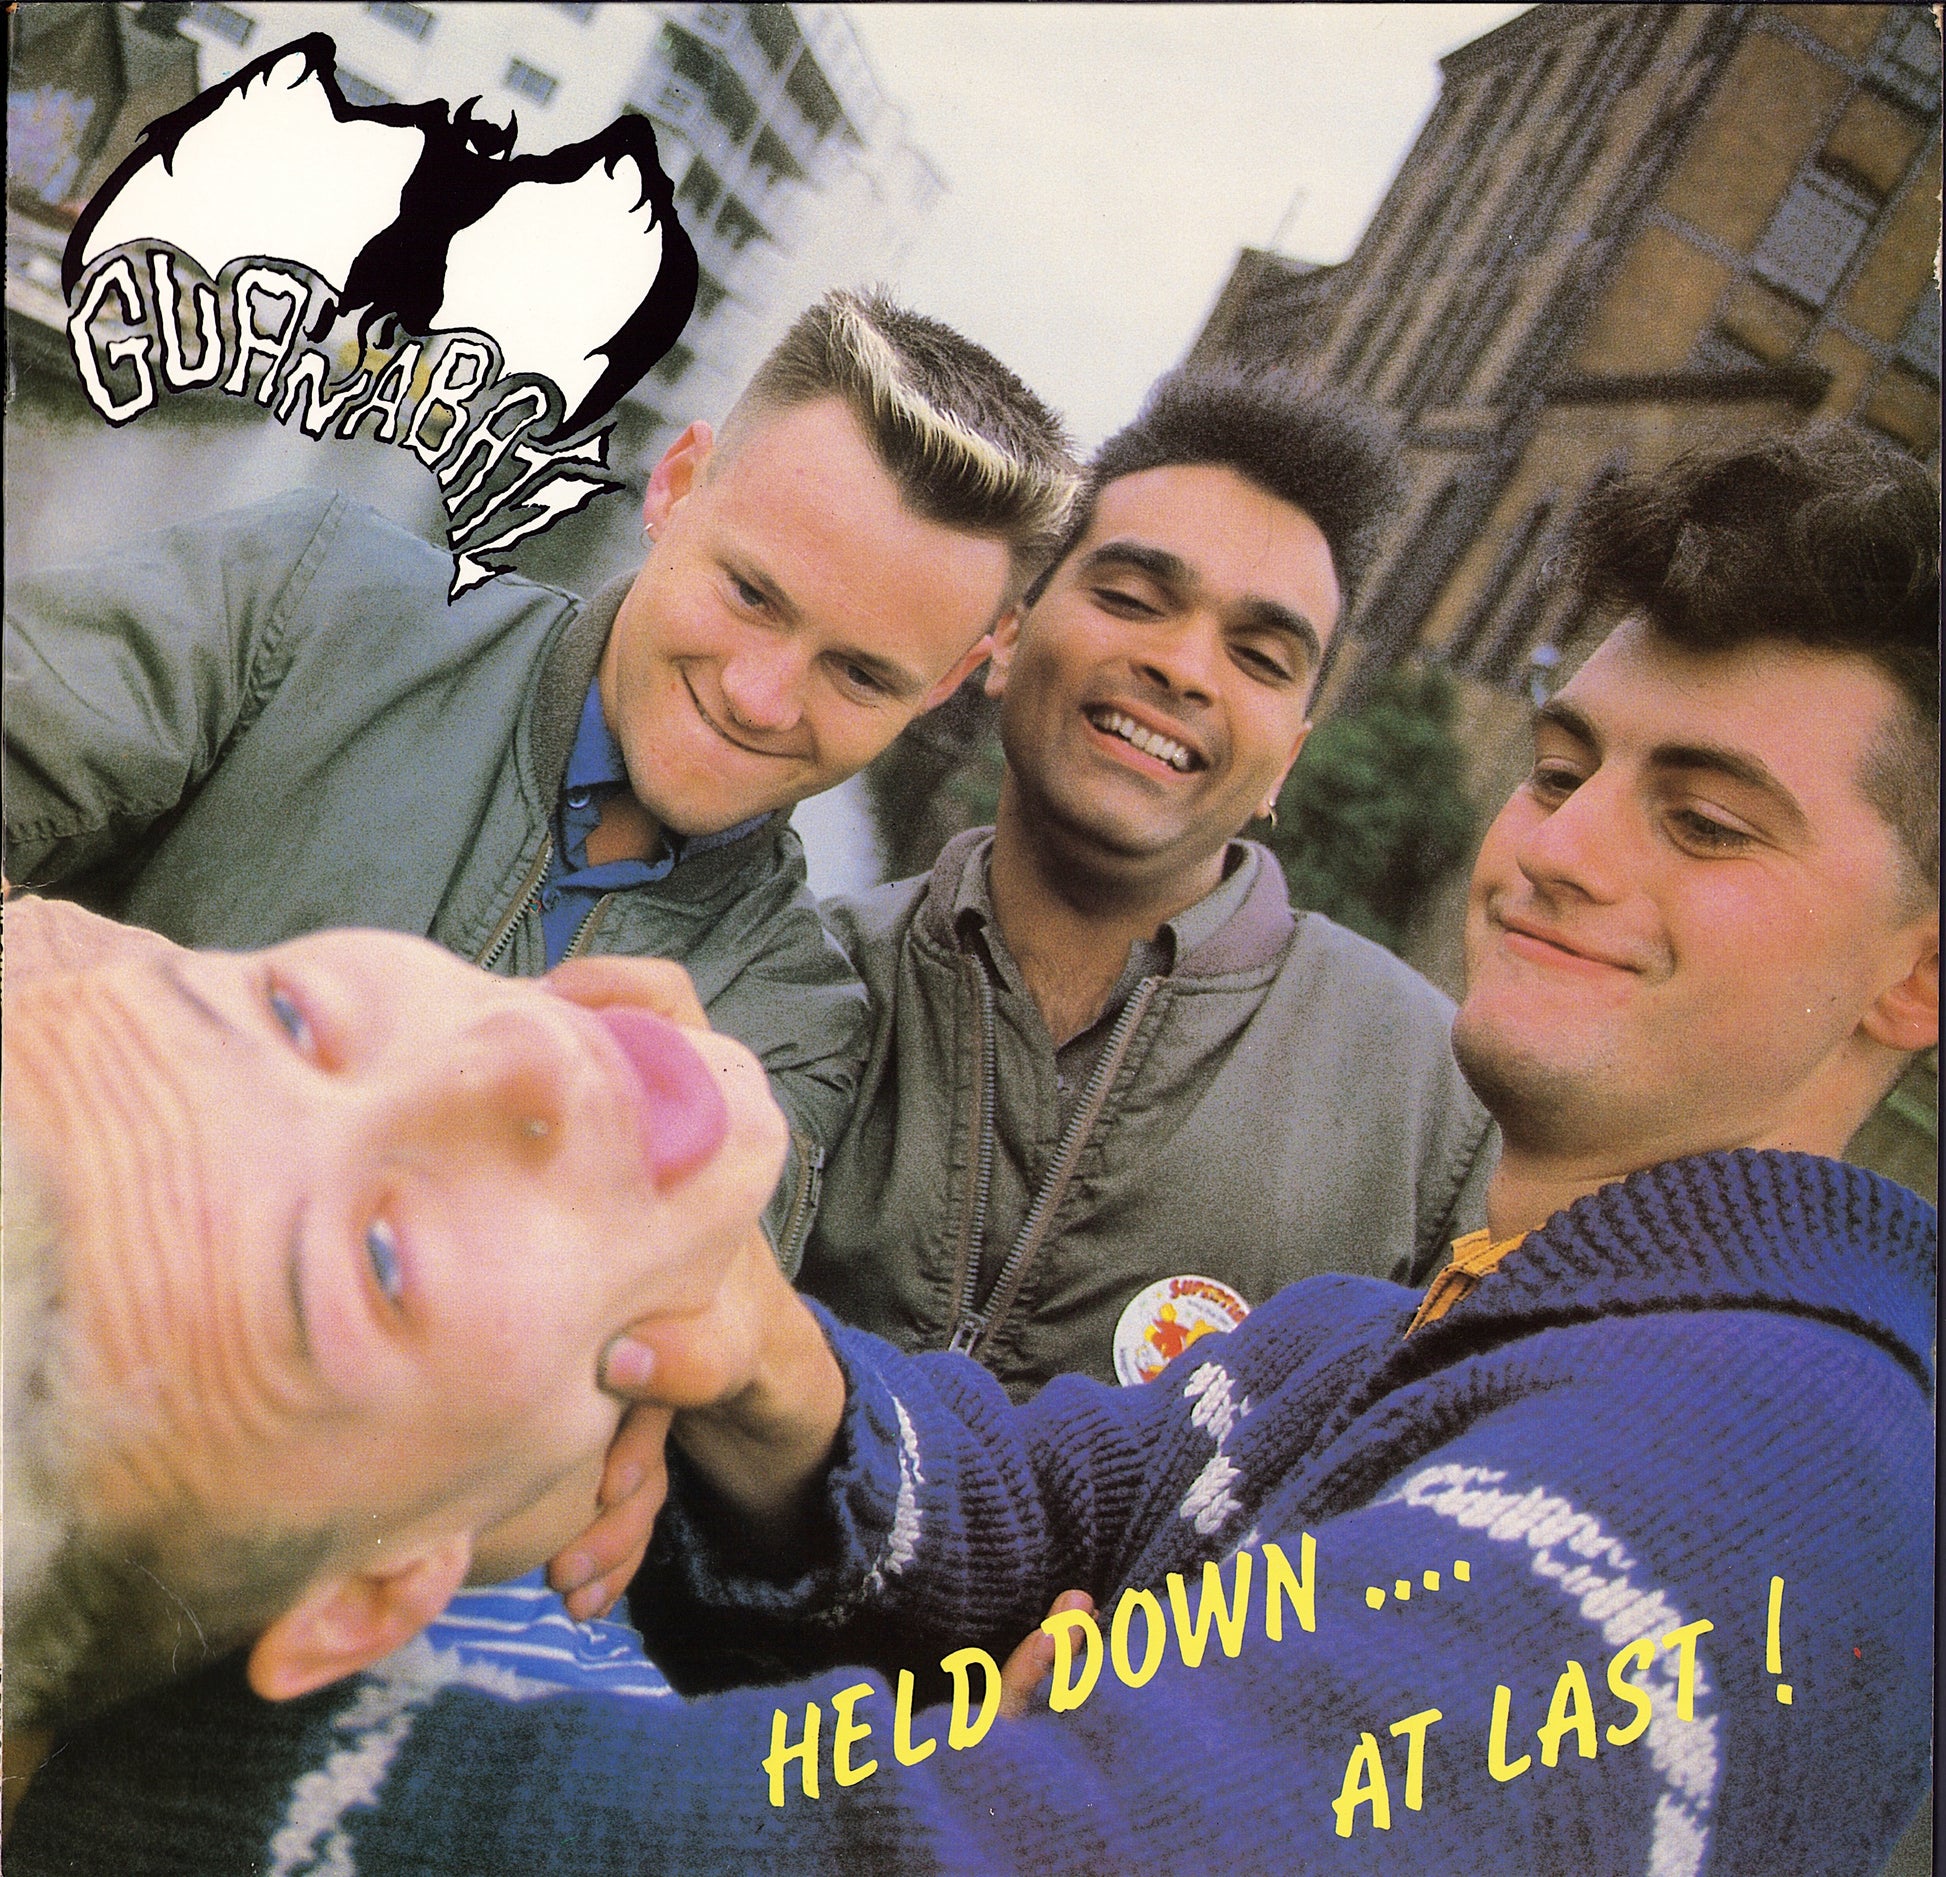 The Guana Batz ‎– Held Down To Vinyl .... At Last! Vinyl LP